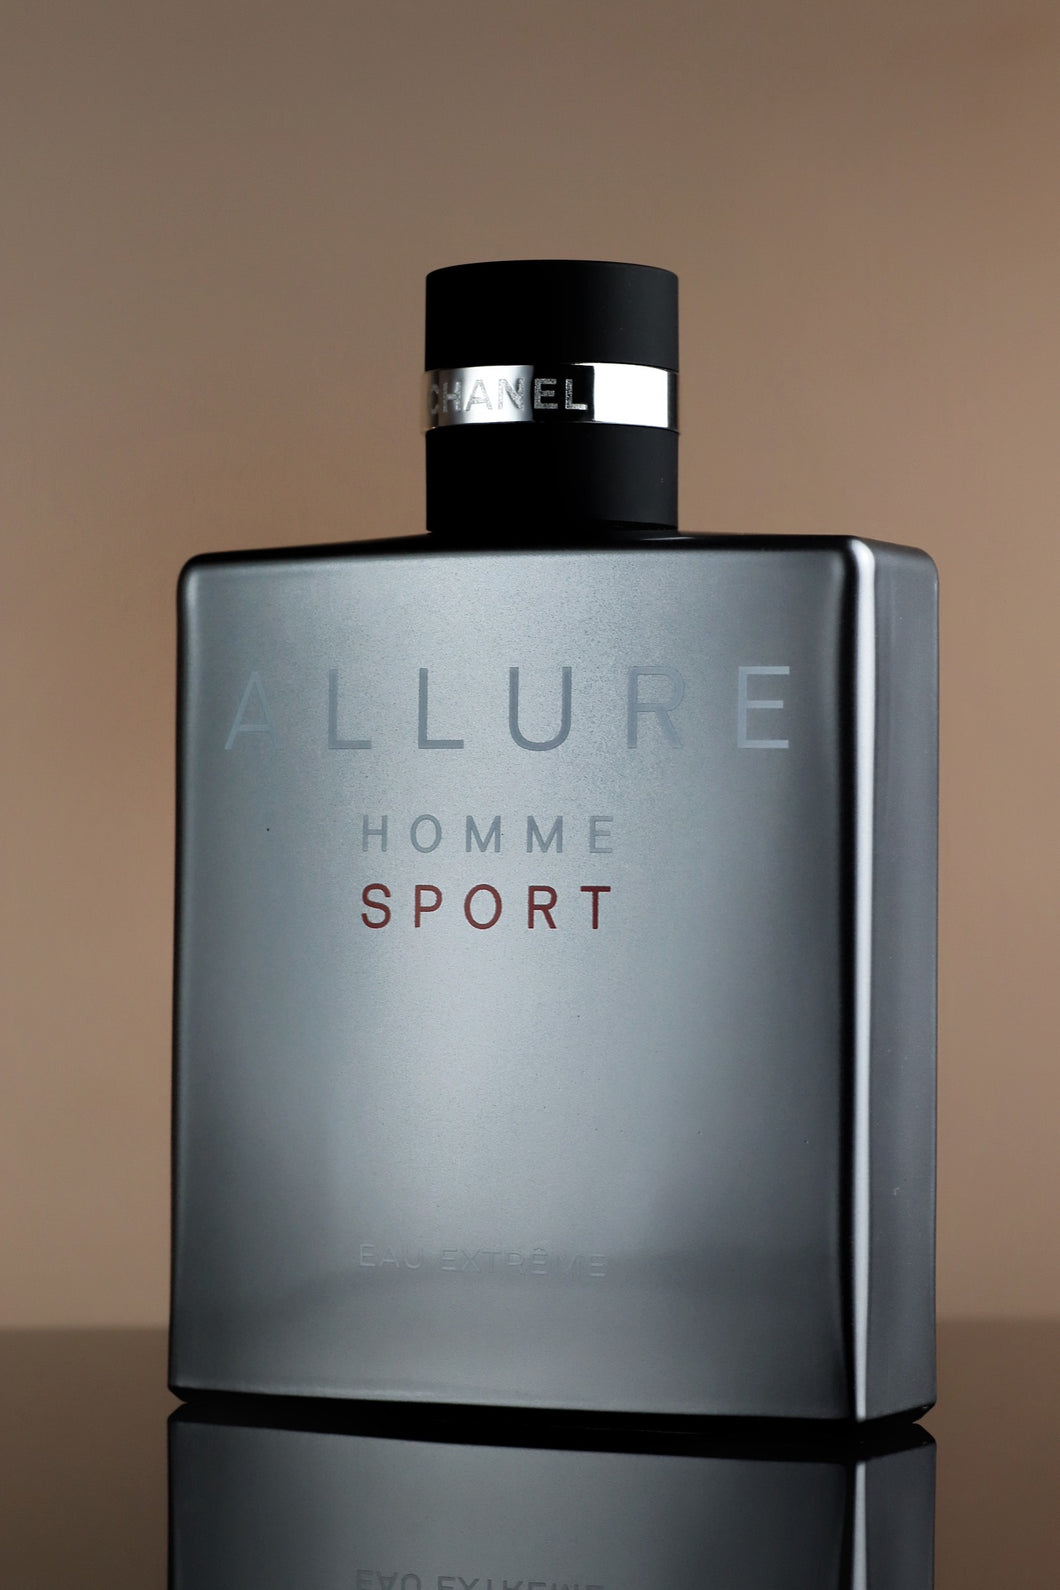 Chanel Allure Homme Sport Eau Extreme Cologne Decant Sample – perfUUm